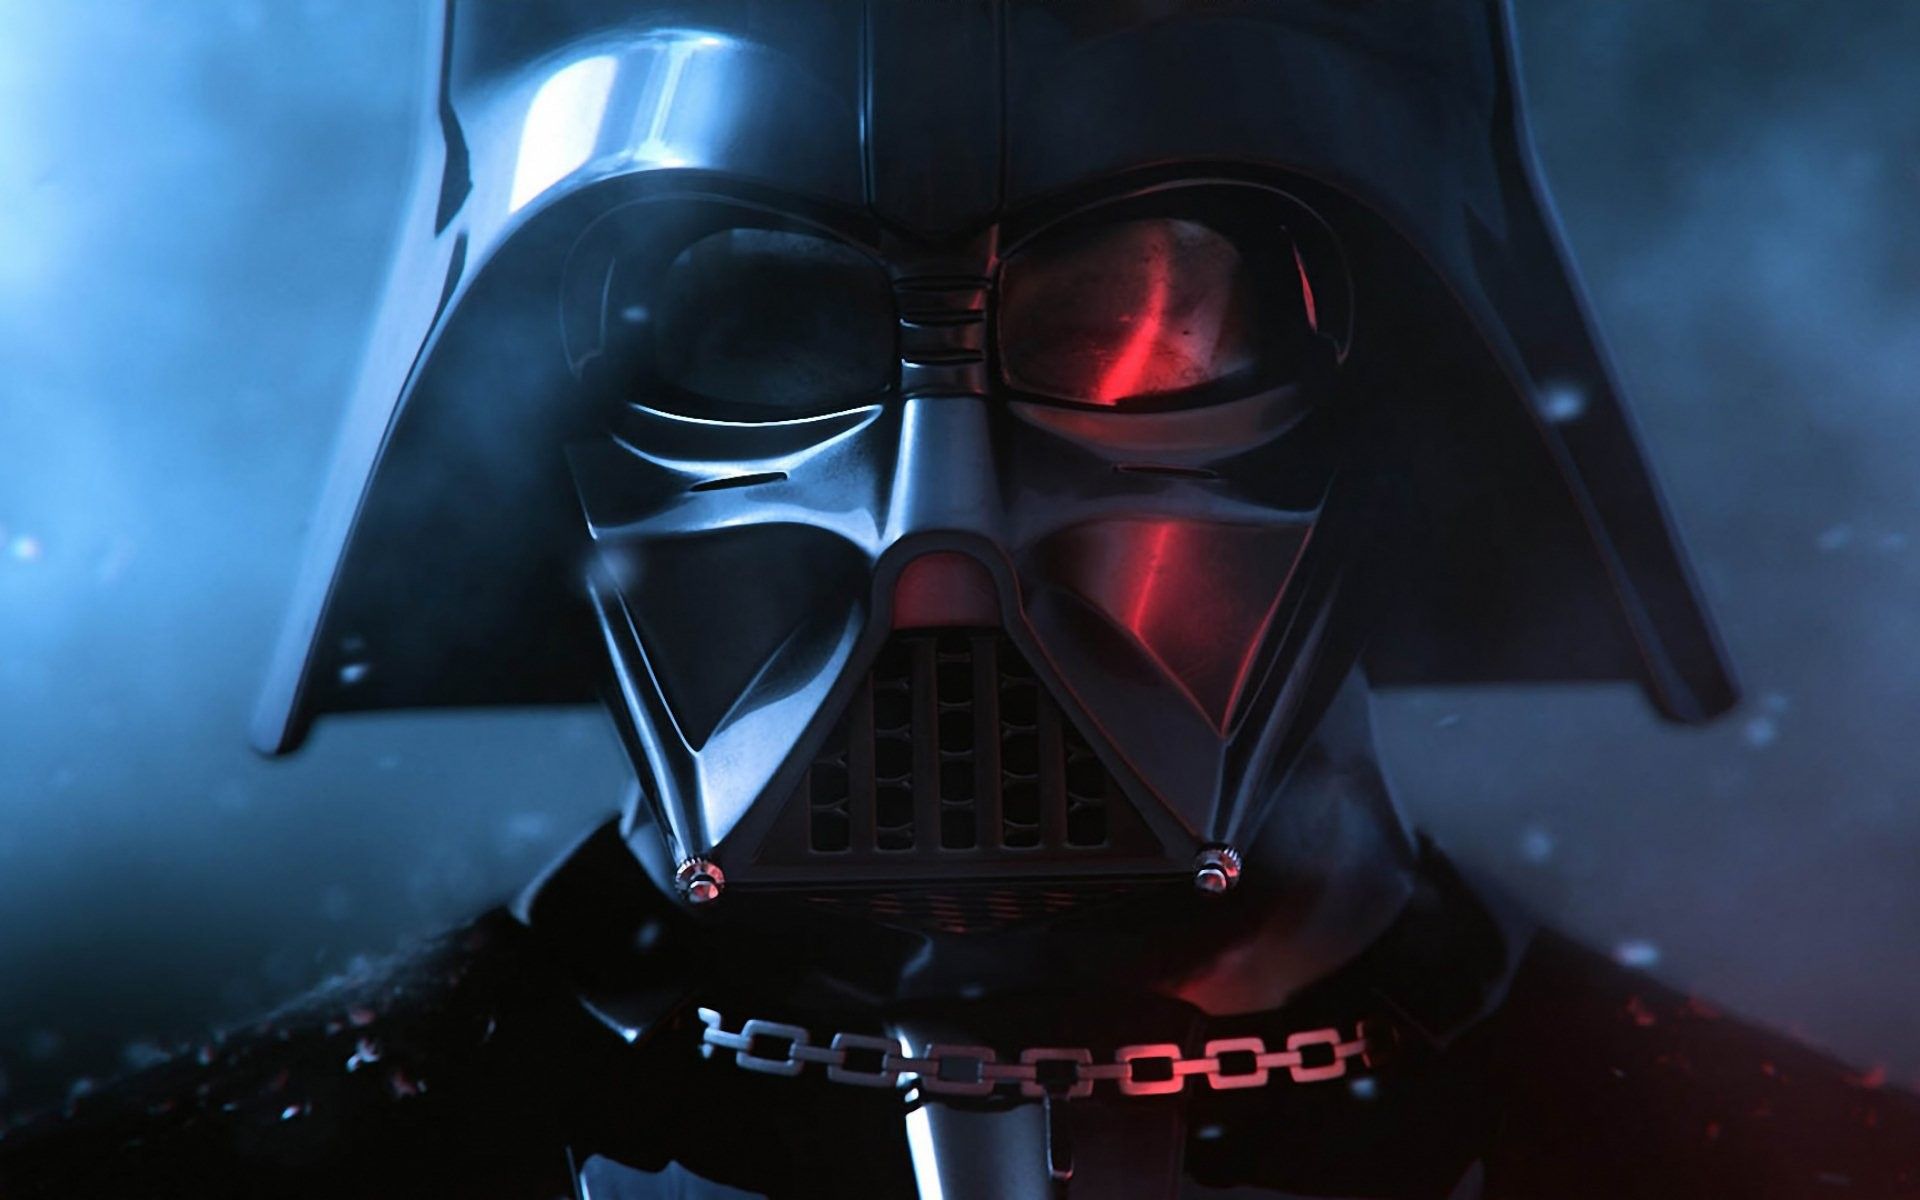 Fondos de pantalla de Darth Vader - FondosMil